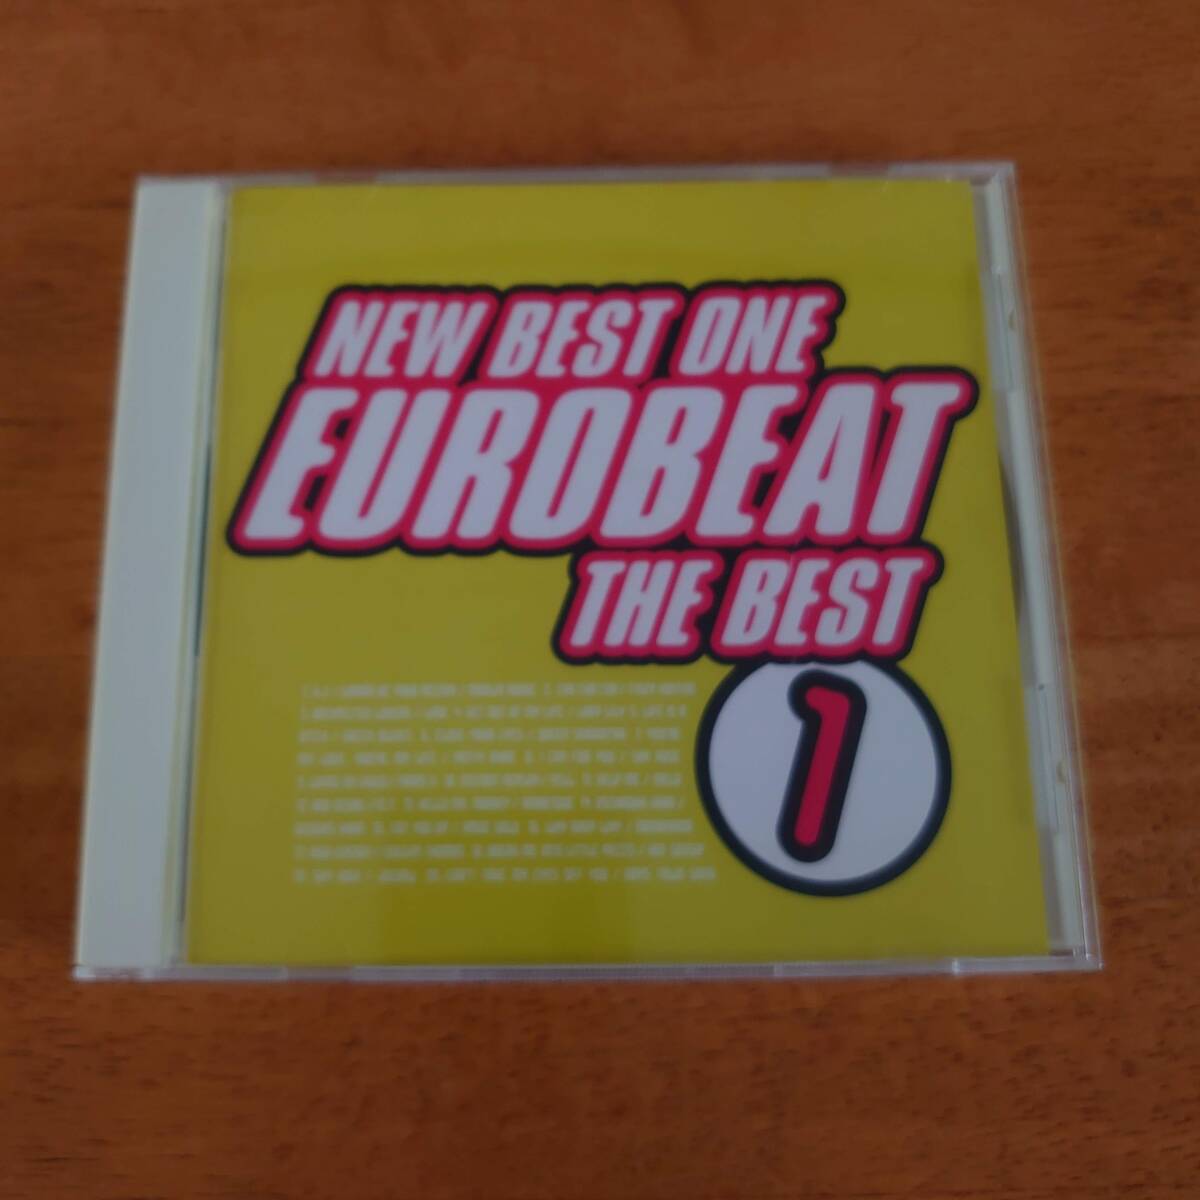 NEW BEST ONE EUROBEAT THE BEST1 ユーロビート・ザ・ベスト 【CD】の画像1